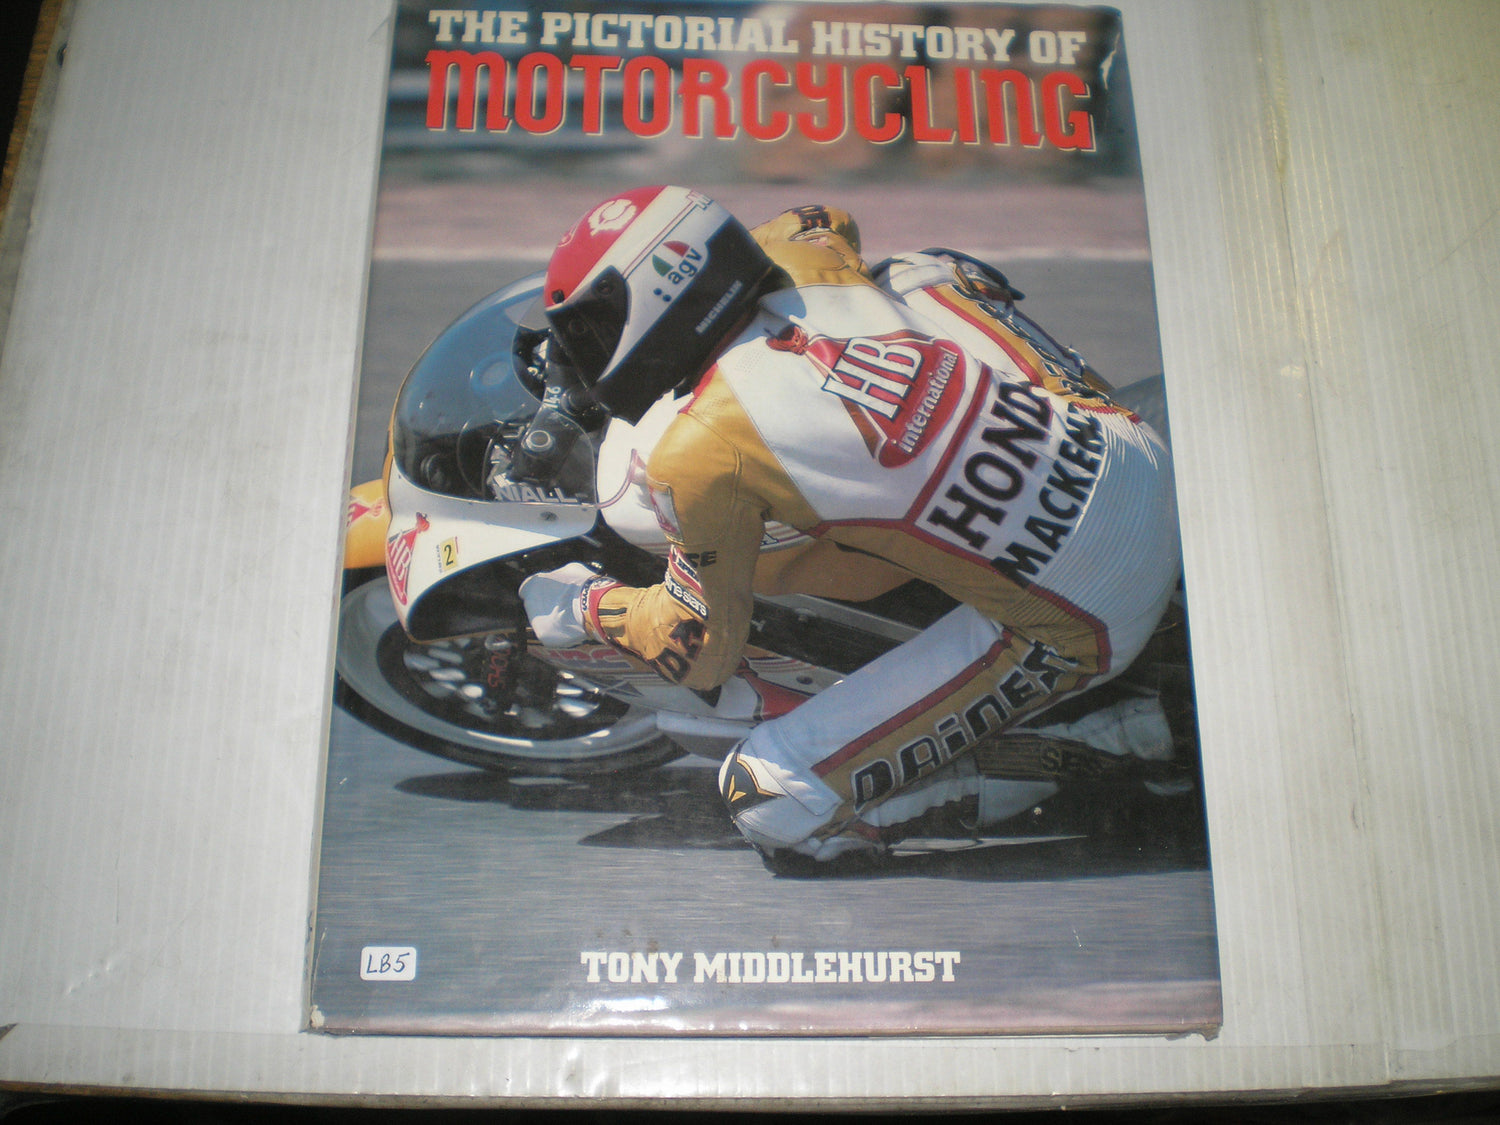 European Motorcycle Literature & Books